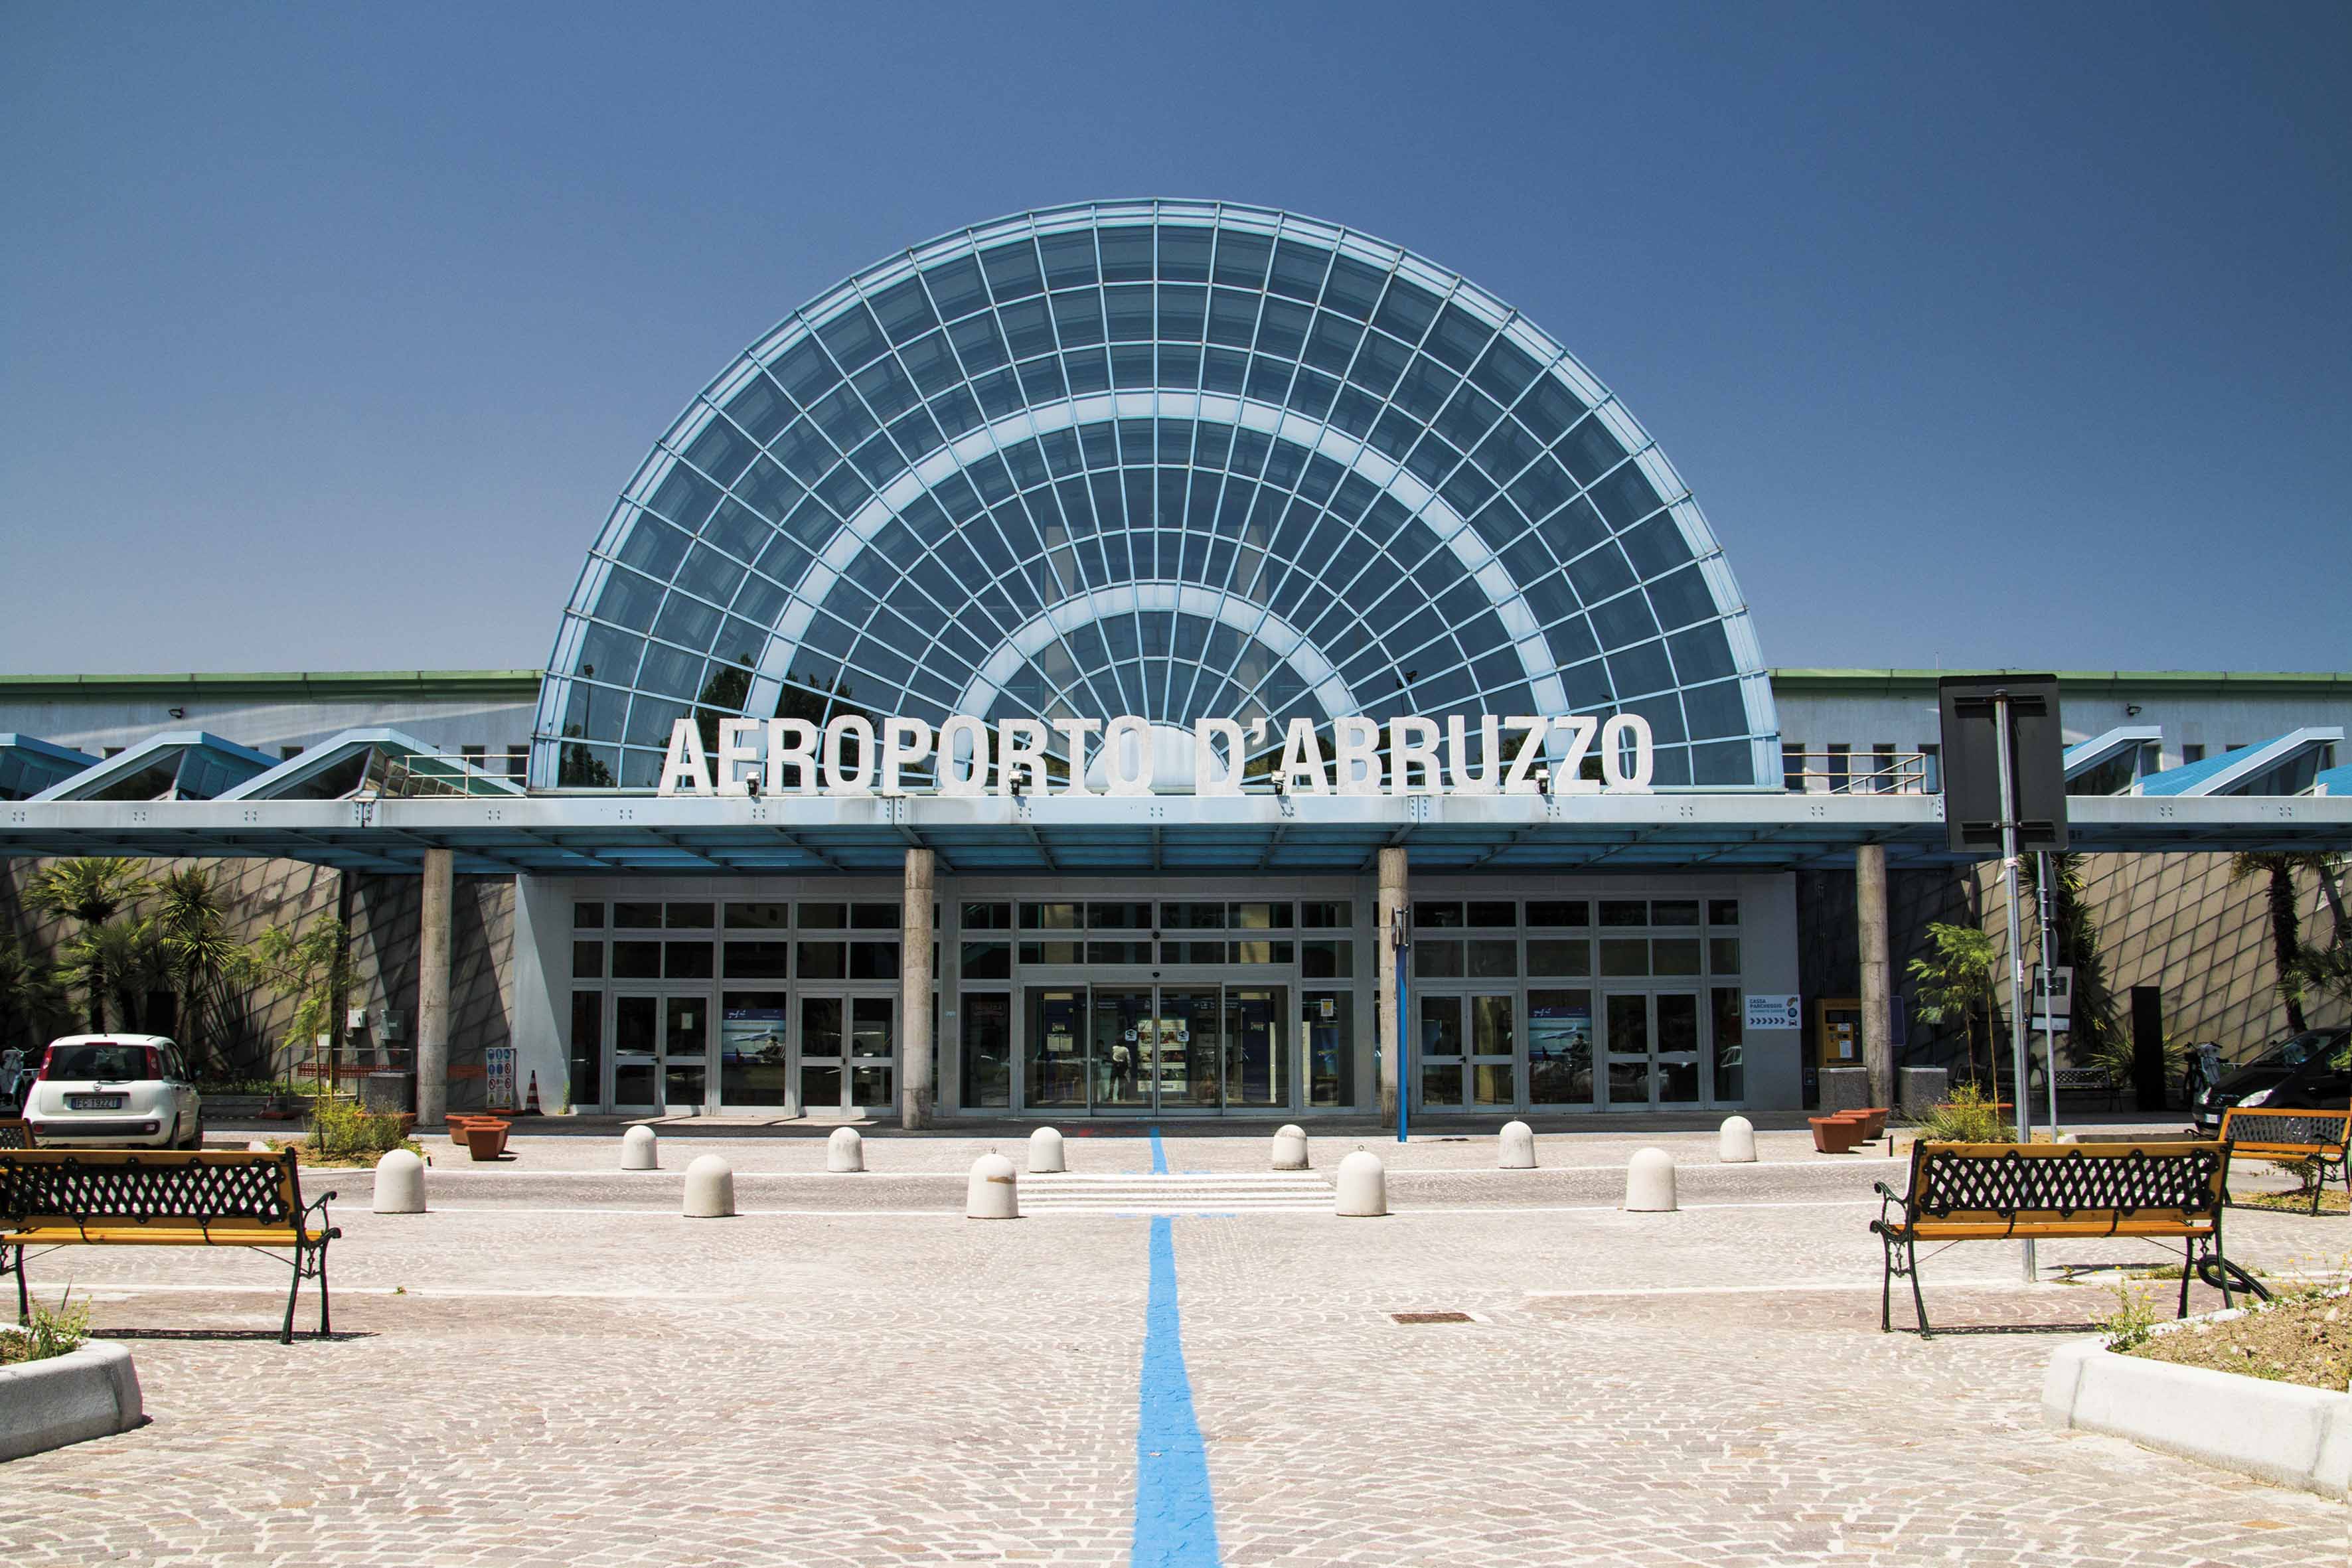 aeroporto_dabruzzo_enrico_paolini_sede.jpg